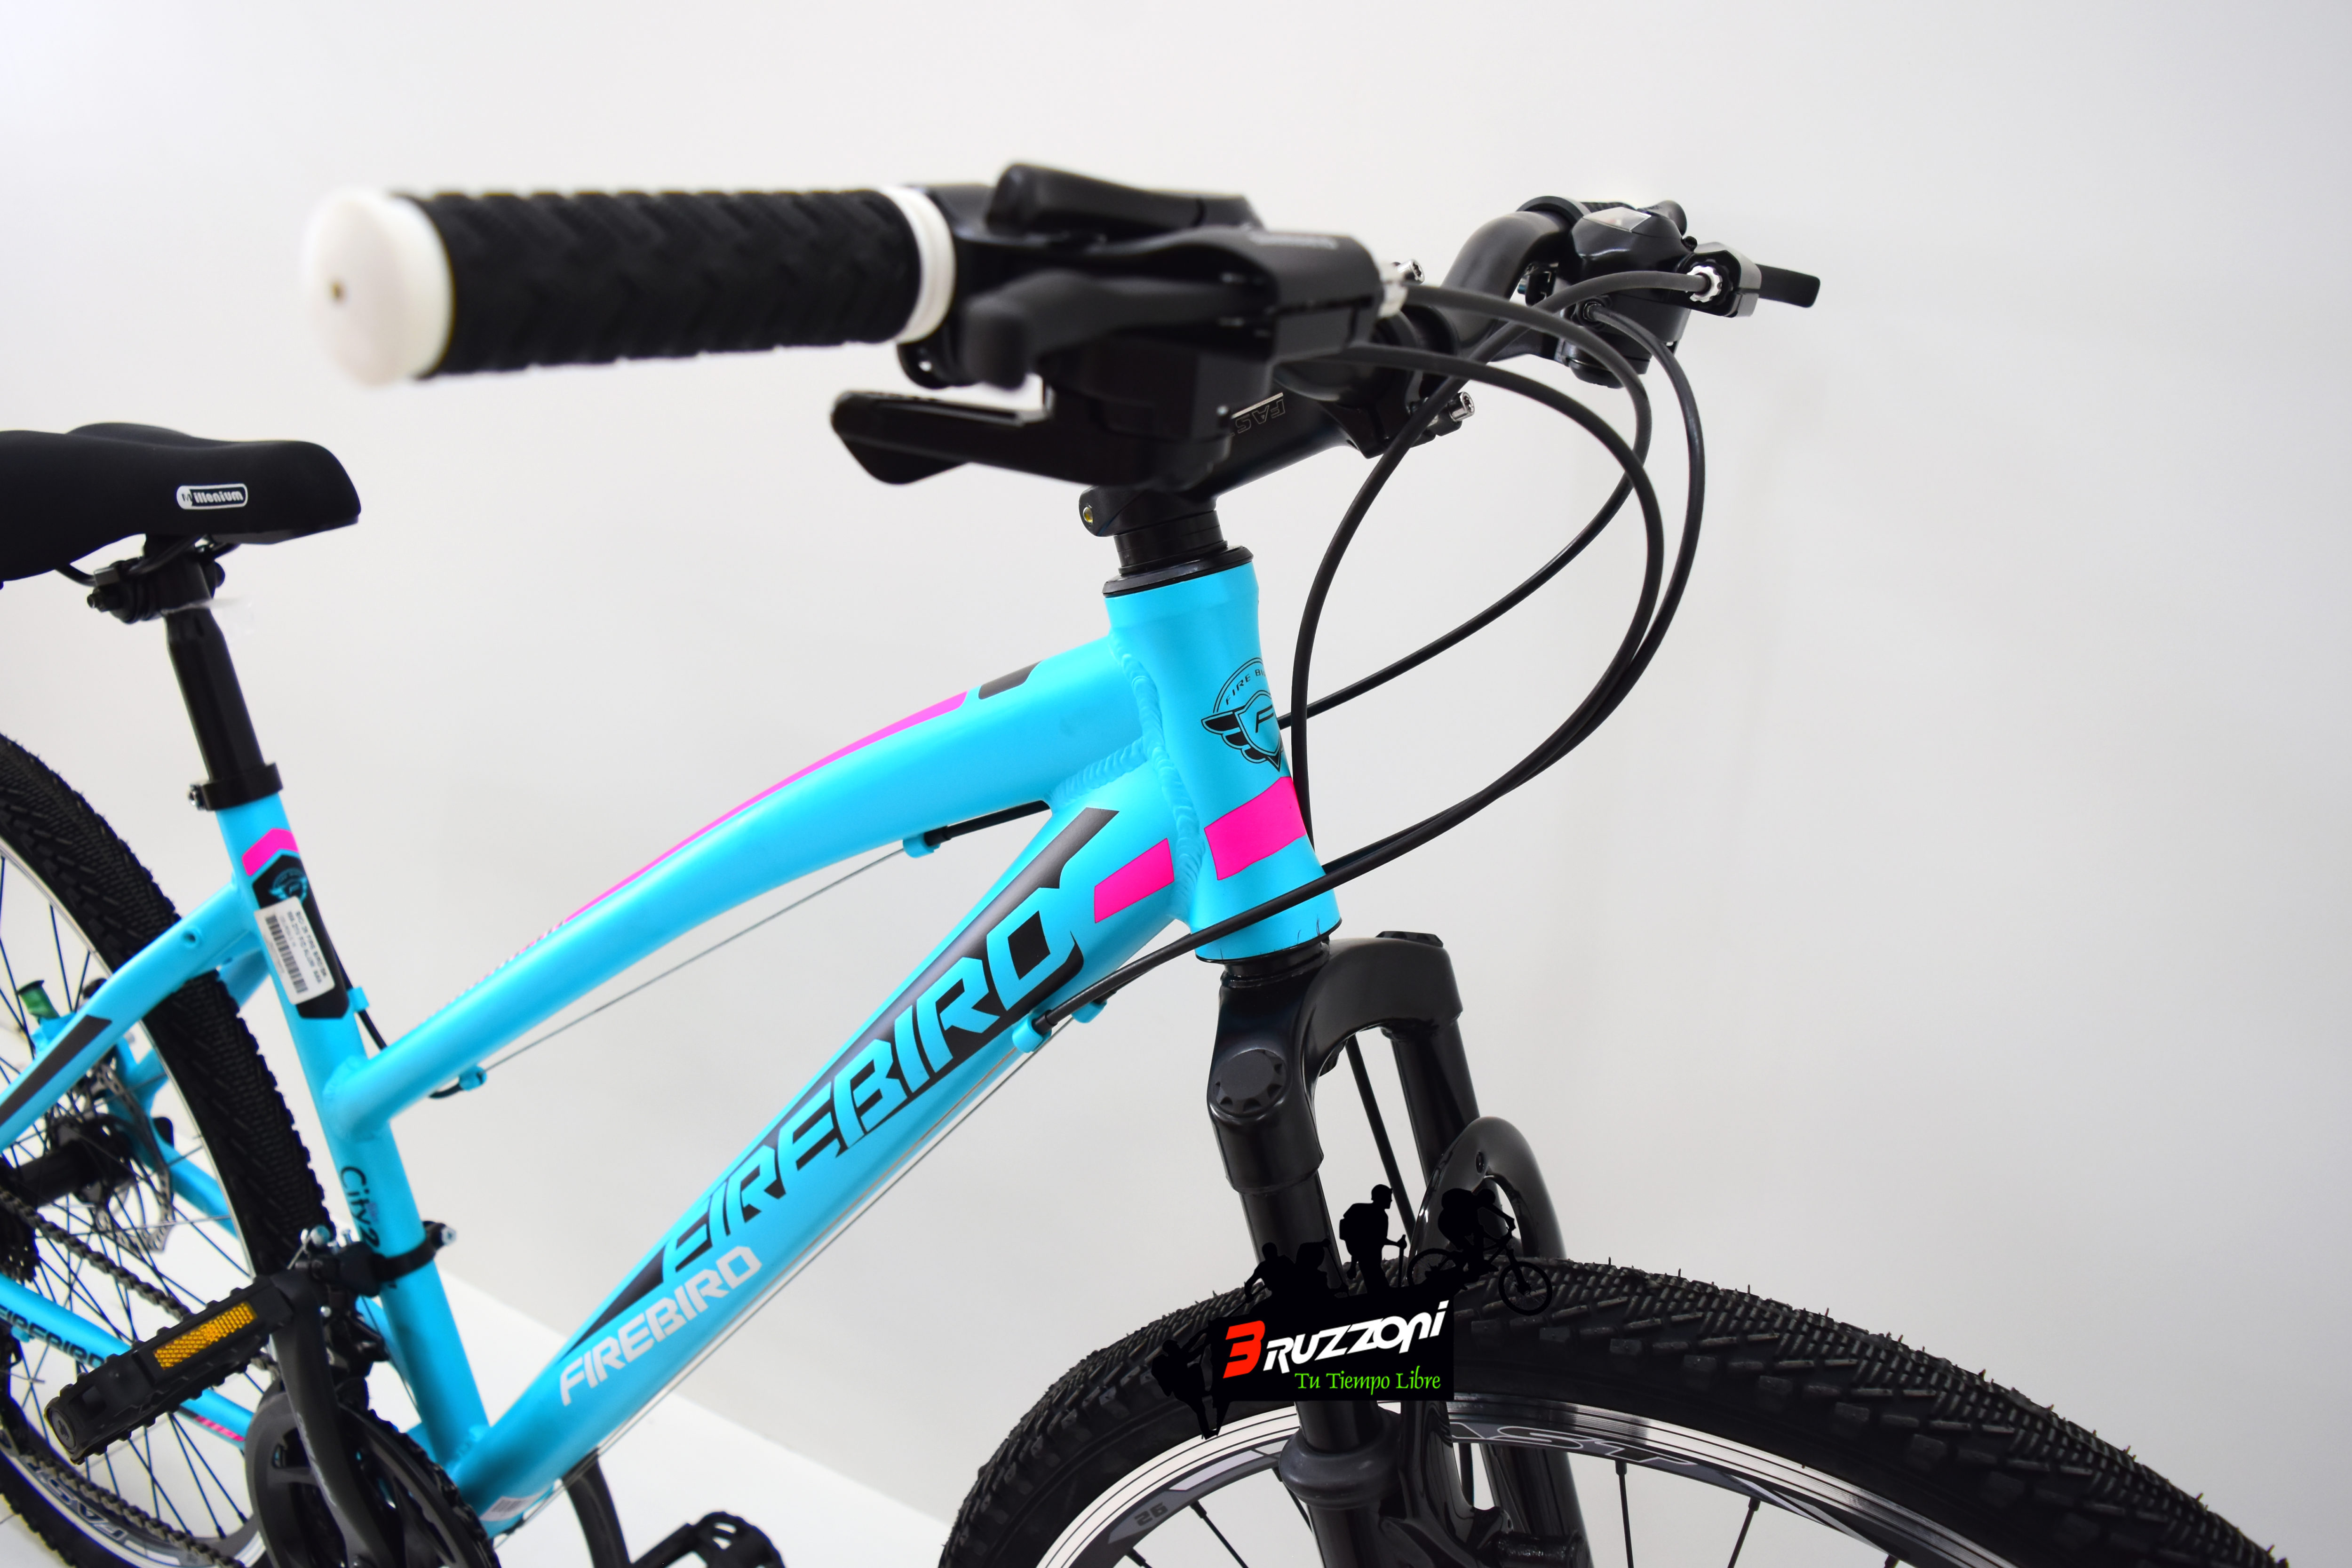 Bicicleta Fire Bird Rod 26 Paseo Full Aluminio Dama - Blue Bike